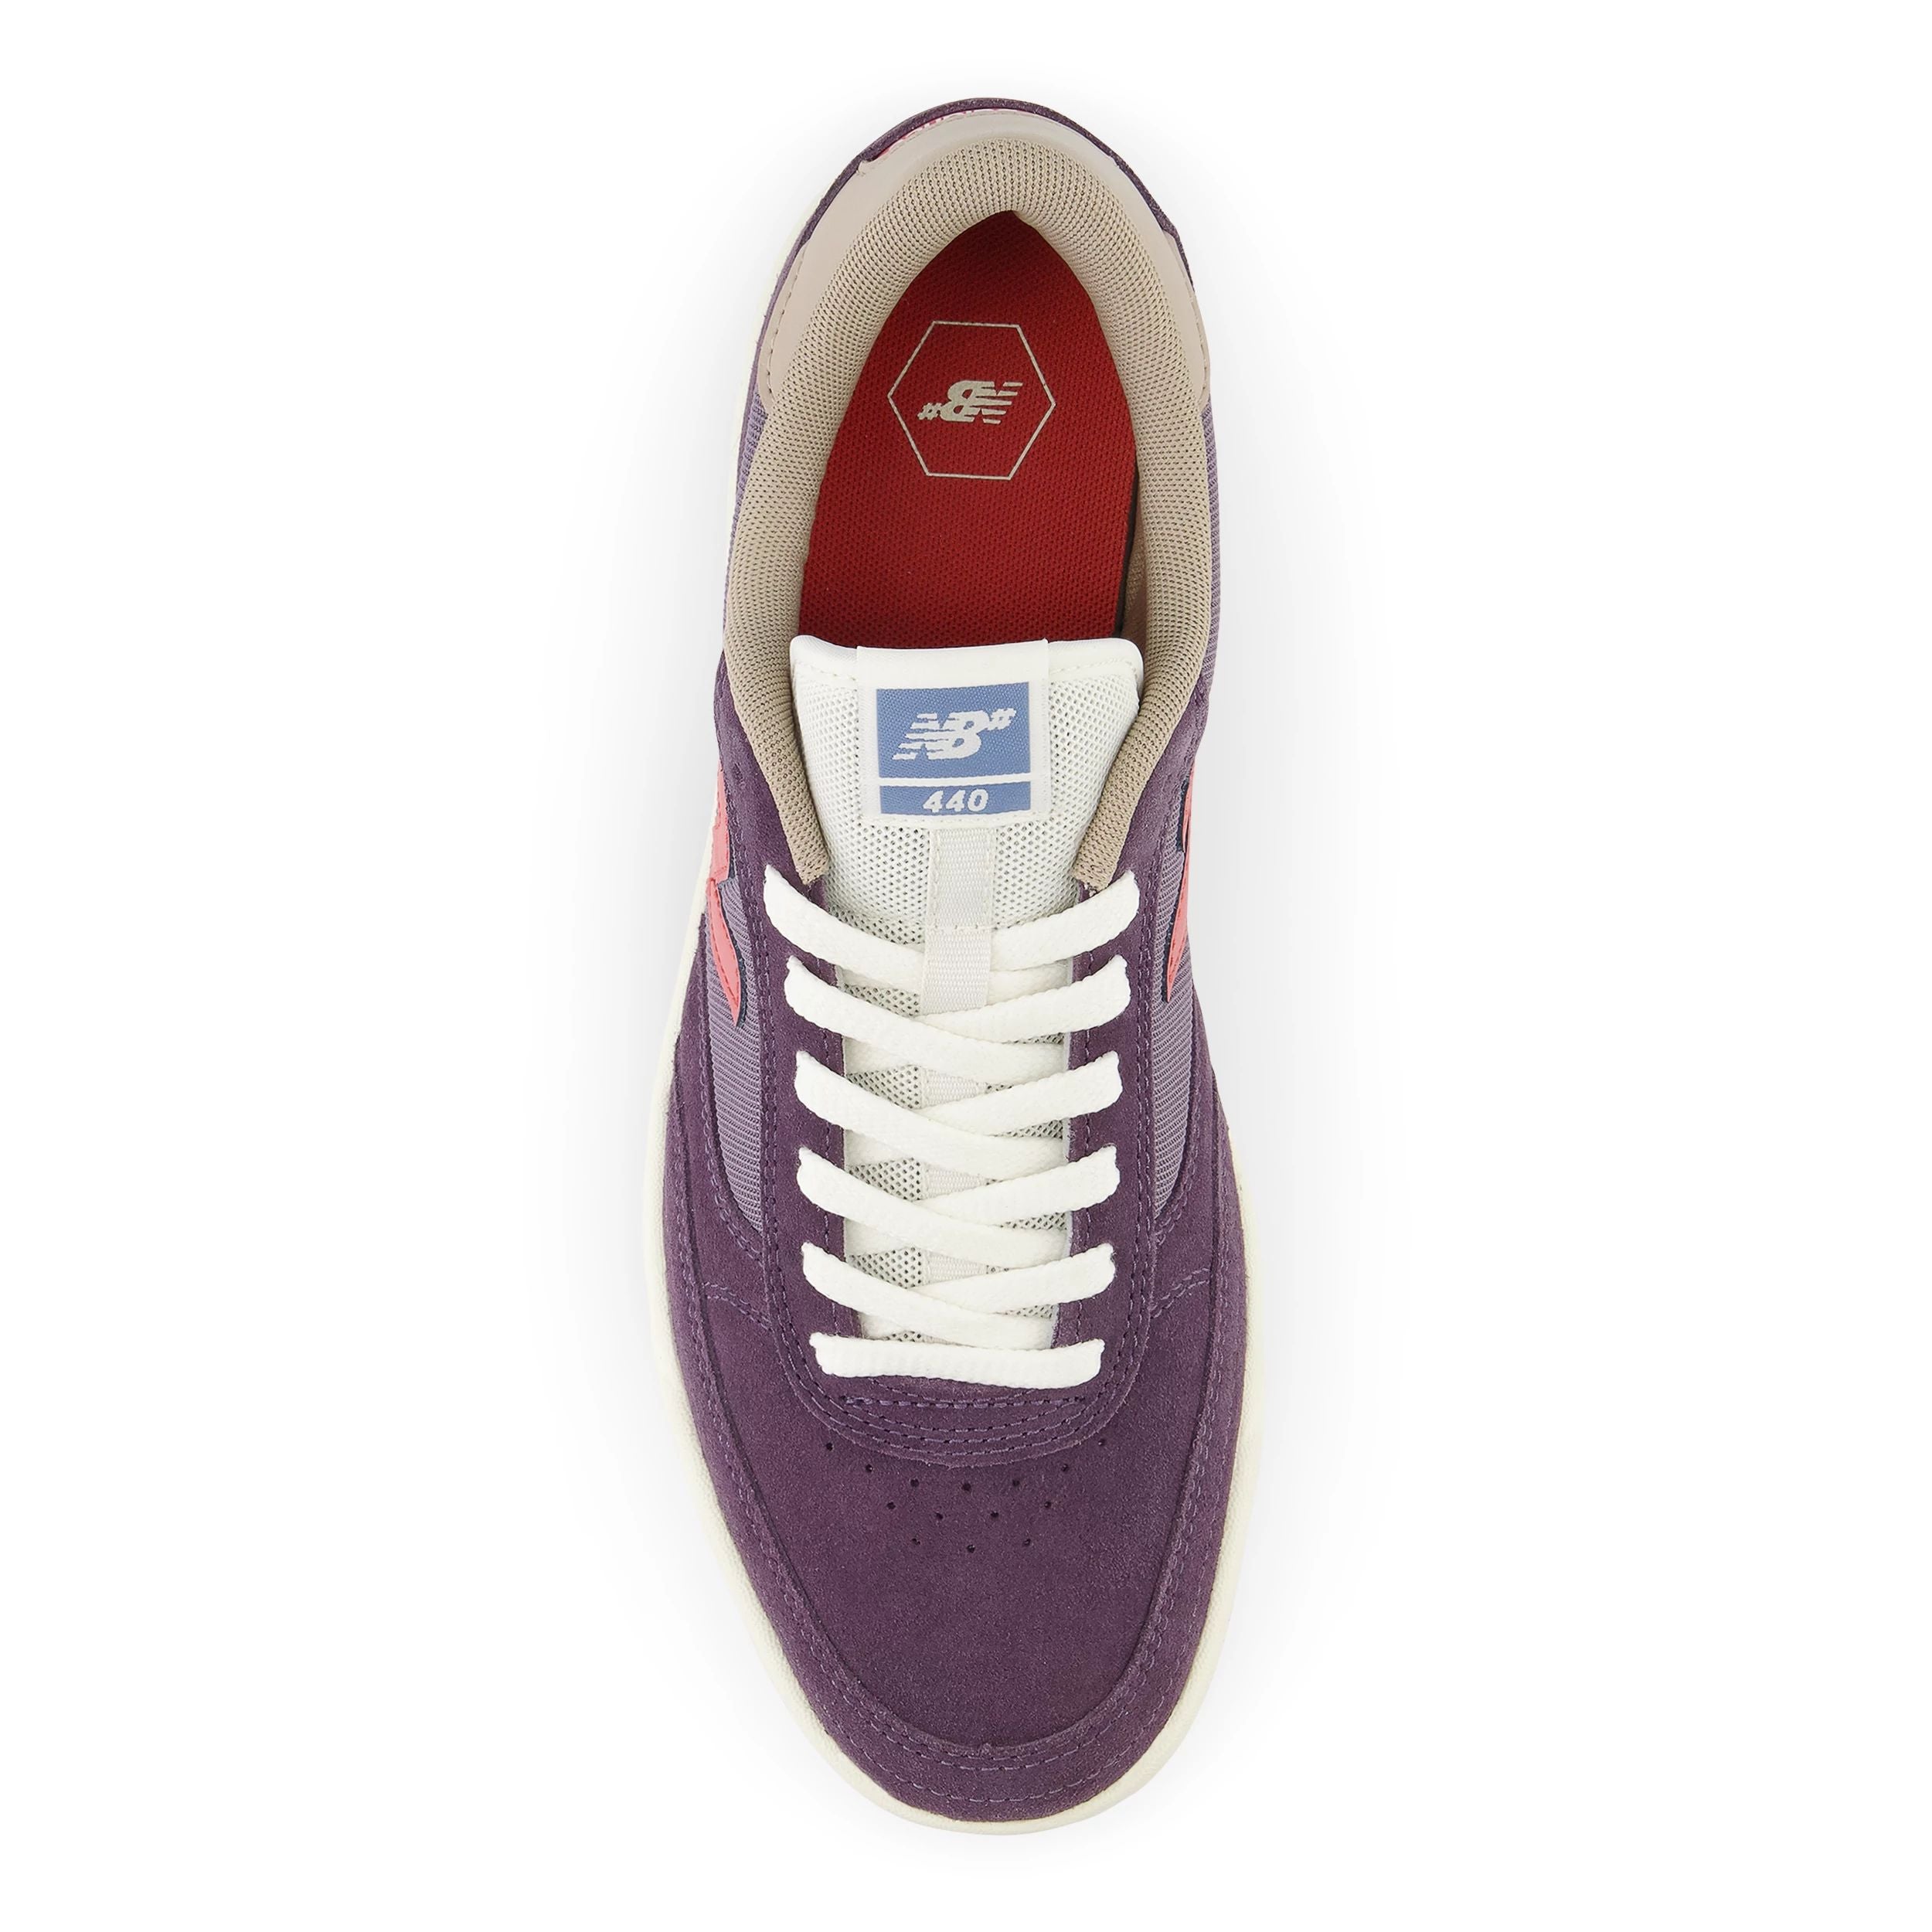 Purple/Red NM440 NB Numeric Skate Shoe Top